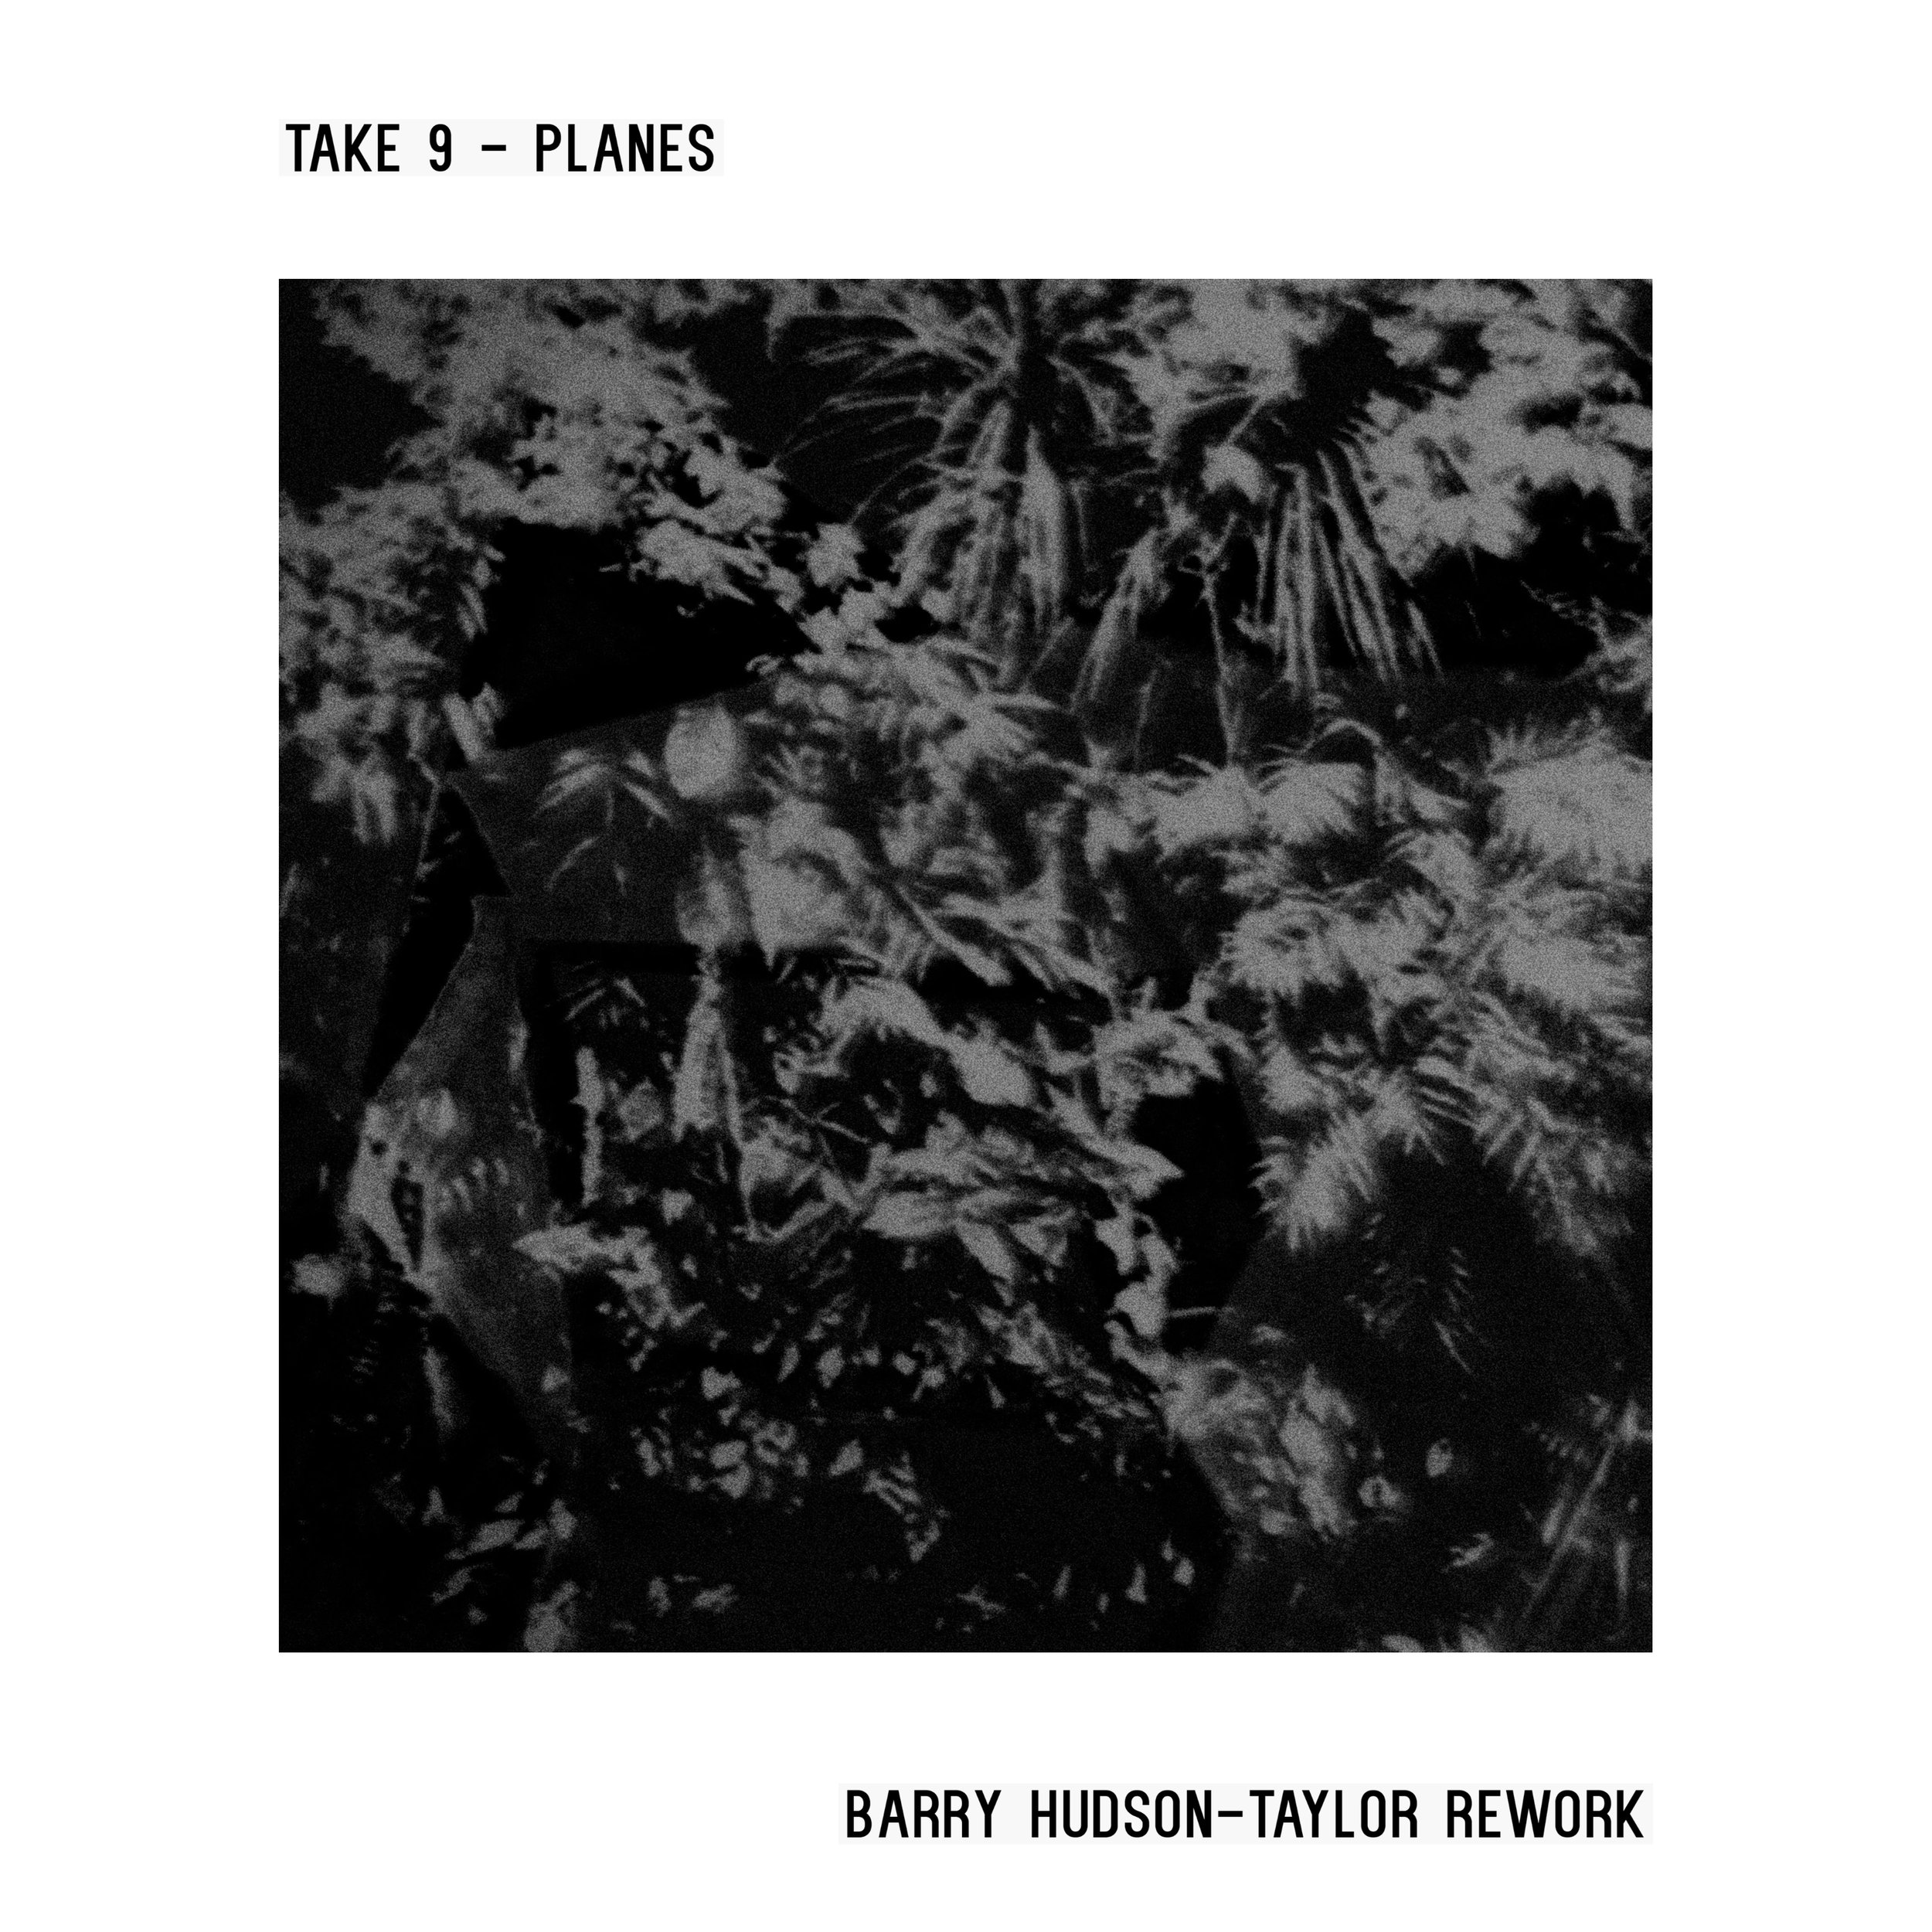 Cover - Take 9 Planes - Barry Hudson-Taylor Rework.jpg